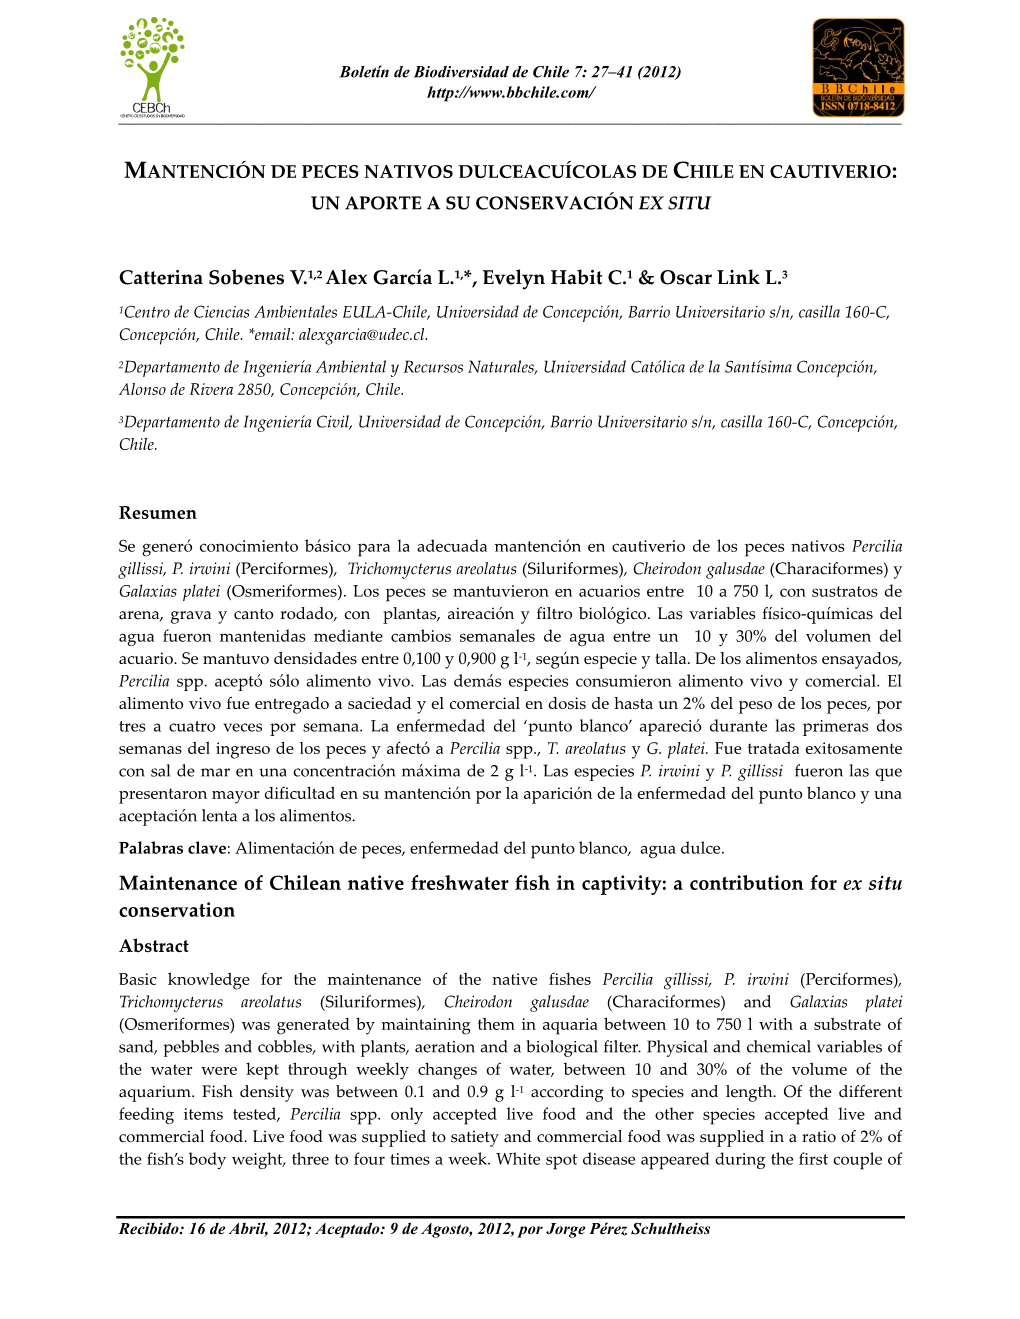 Catterina Sobenes V.1,2 Alex García L.1,*, Evelyn Habit C.1 & Oscar Link